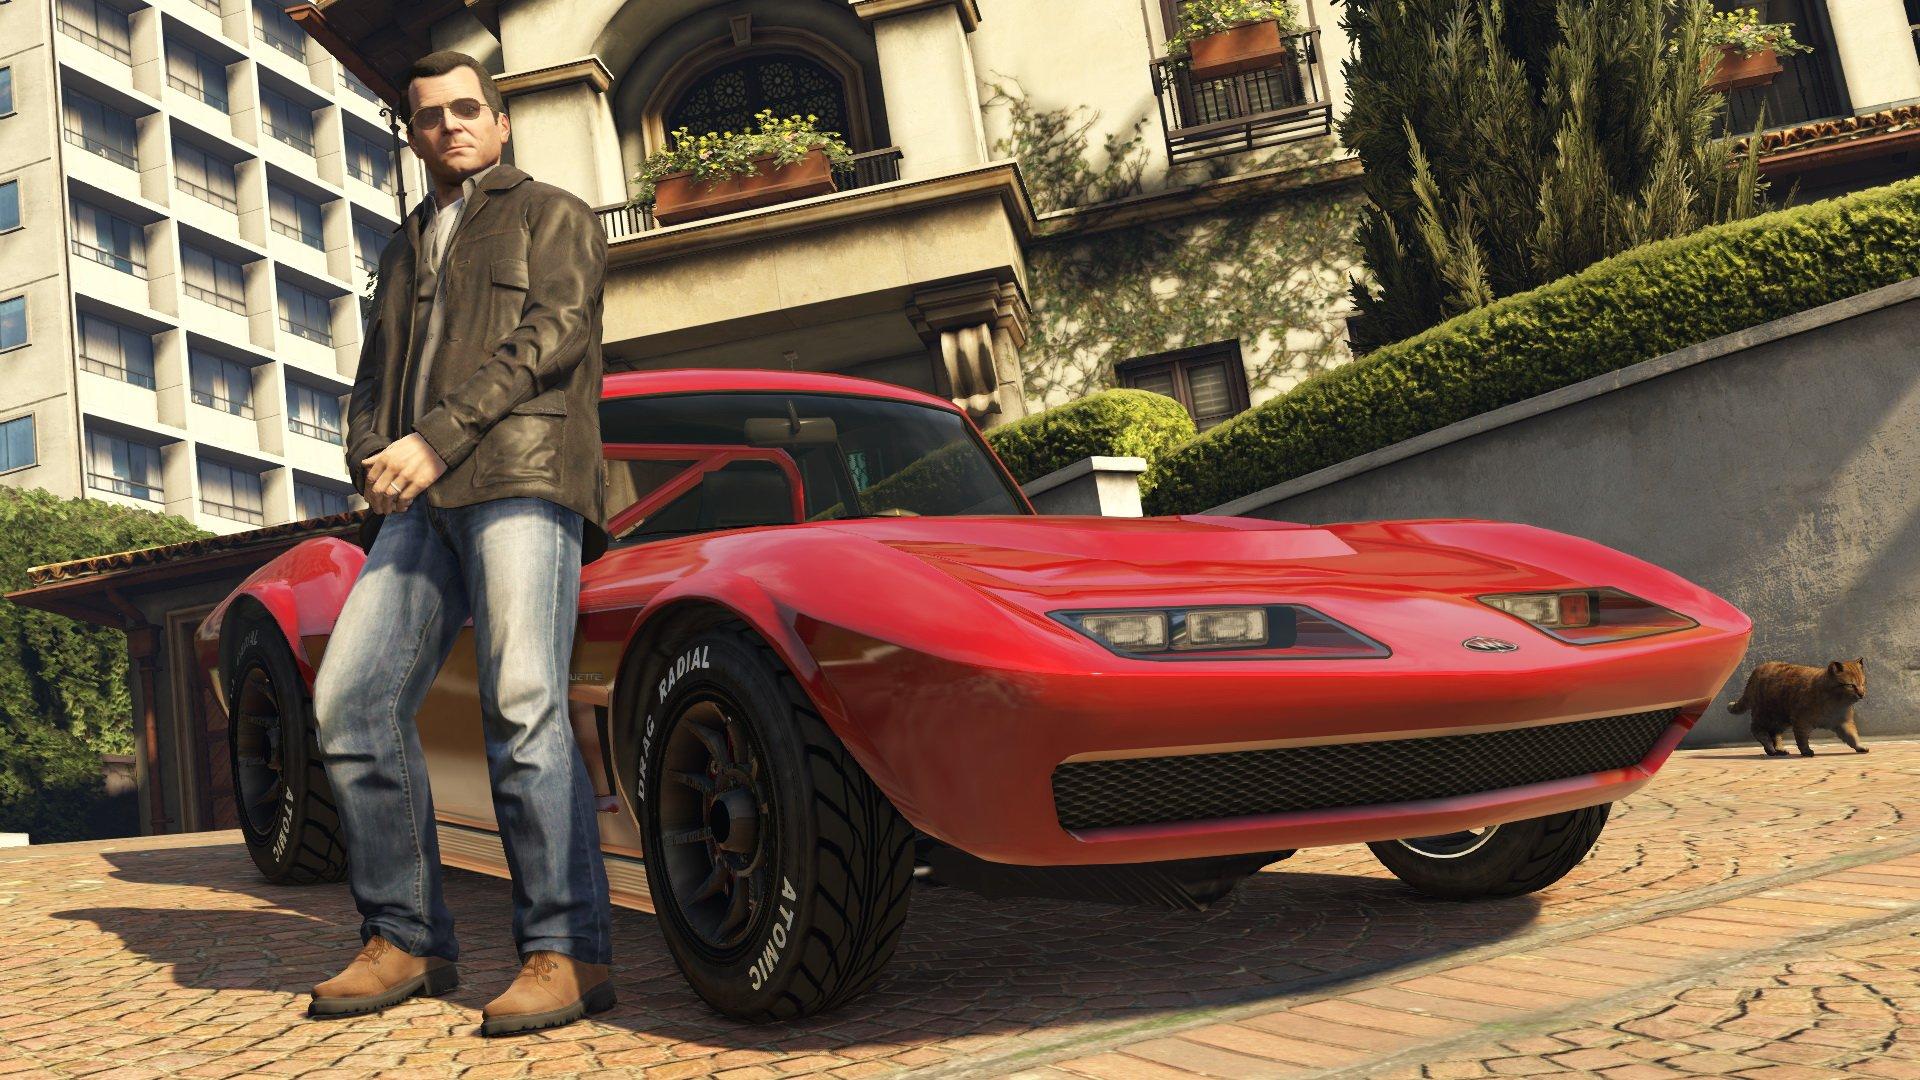  Grand Theft Auto 5 PS4 - PlayStation 4 ( GTA V Ps4